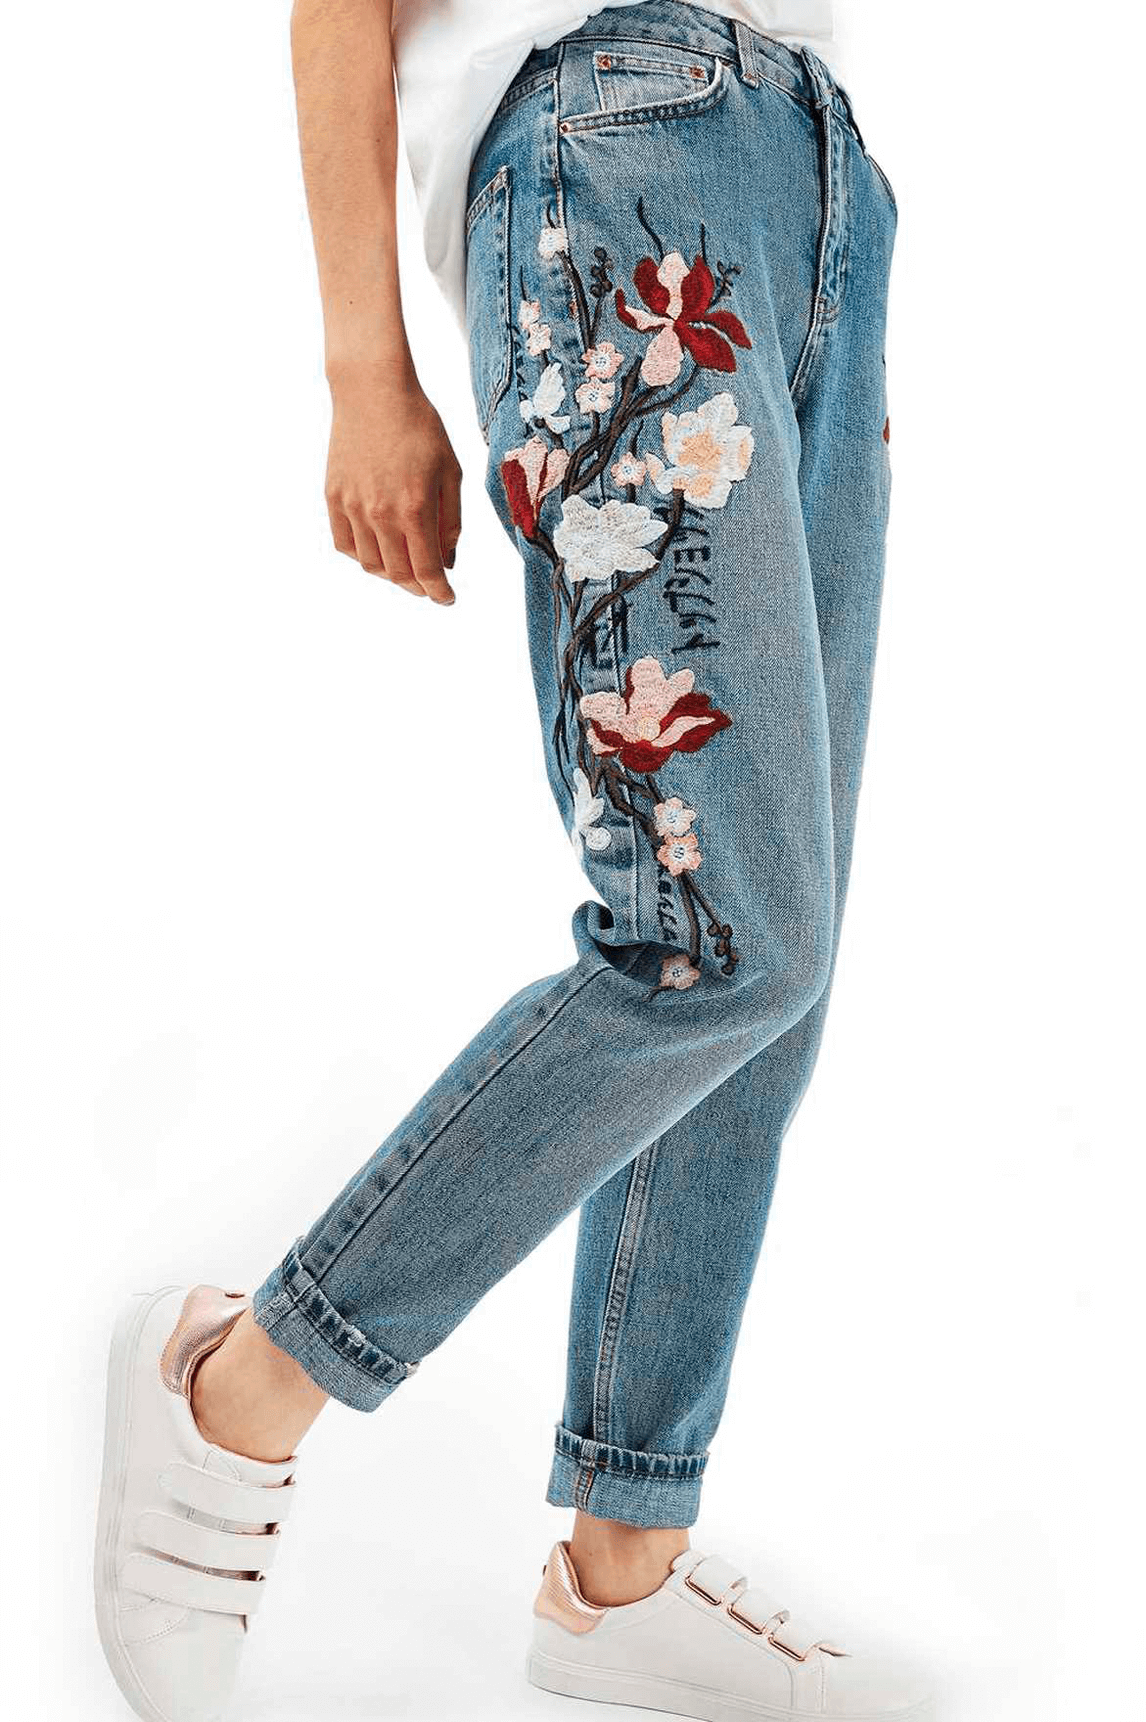 customiza-pantalones-flores-bordadas-jeans - DIY